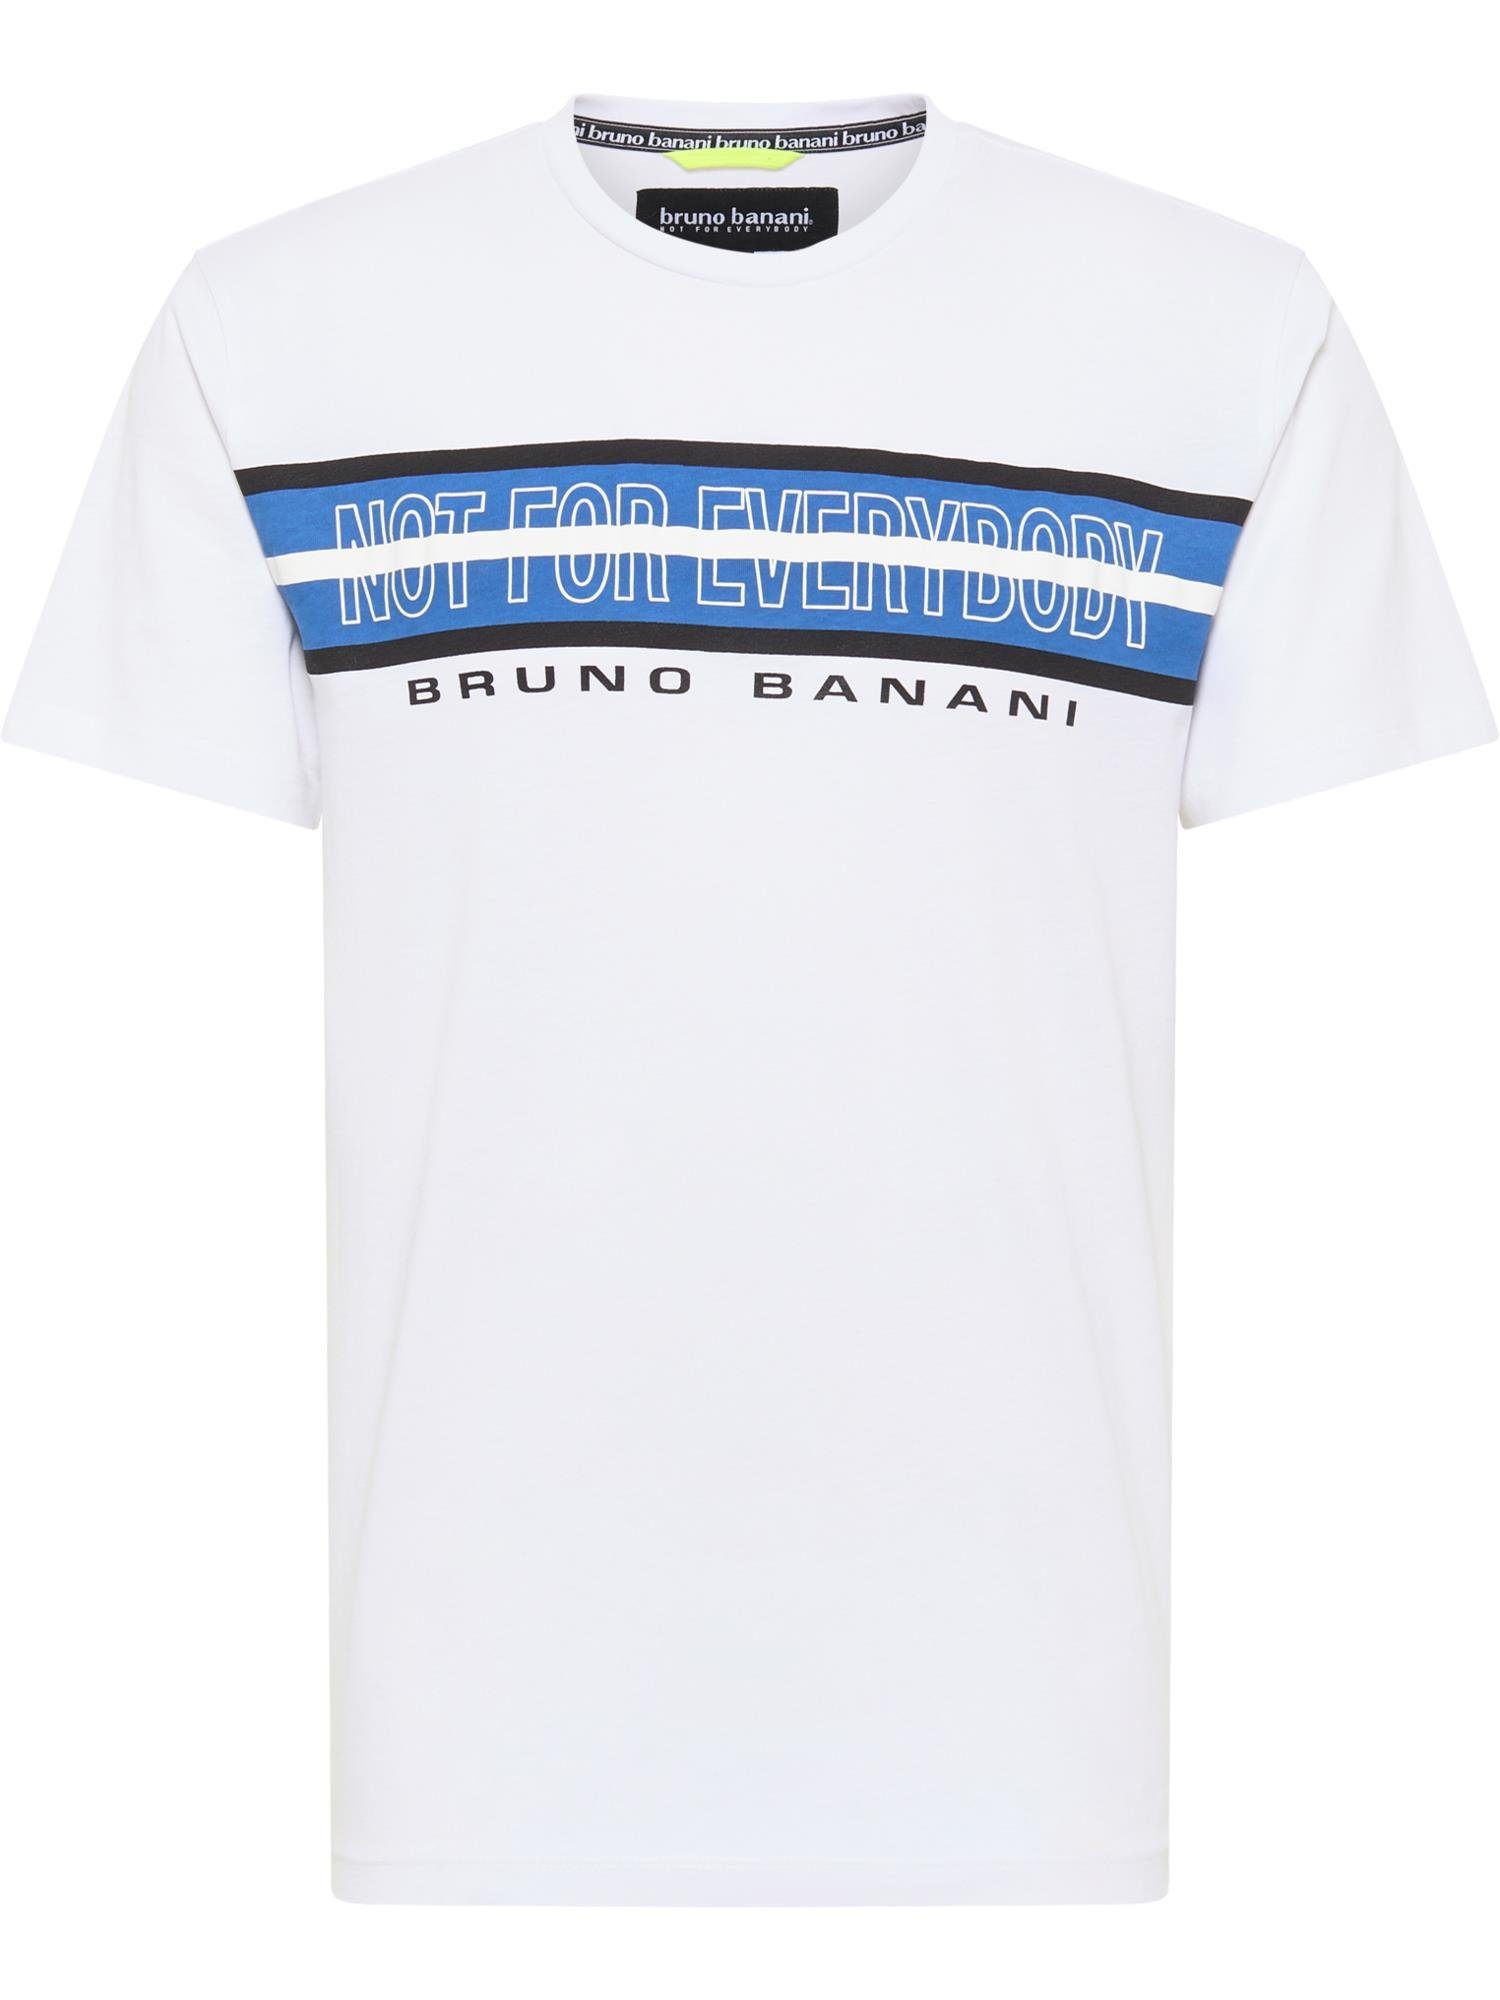 Becker Banani T-Shirt Bruno